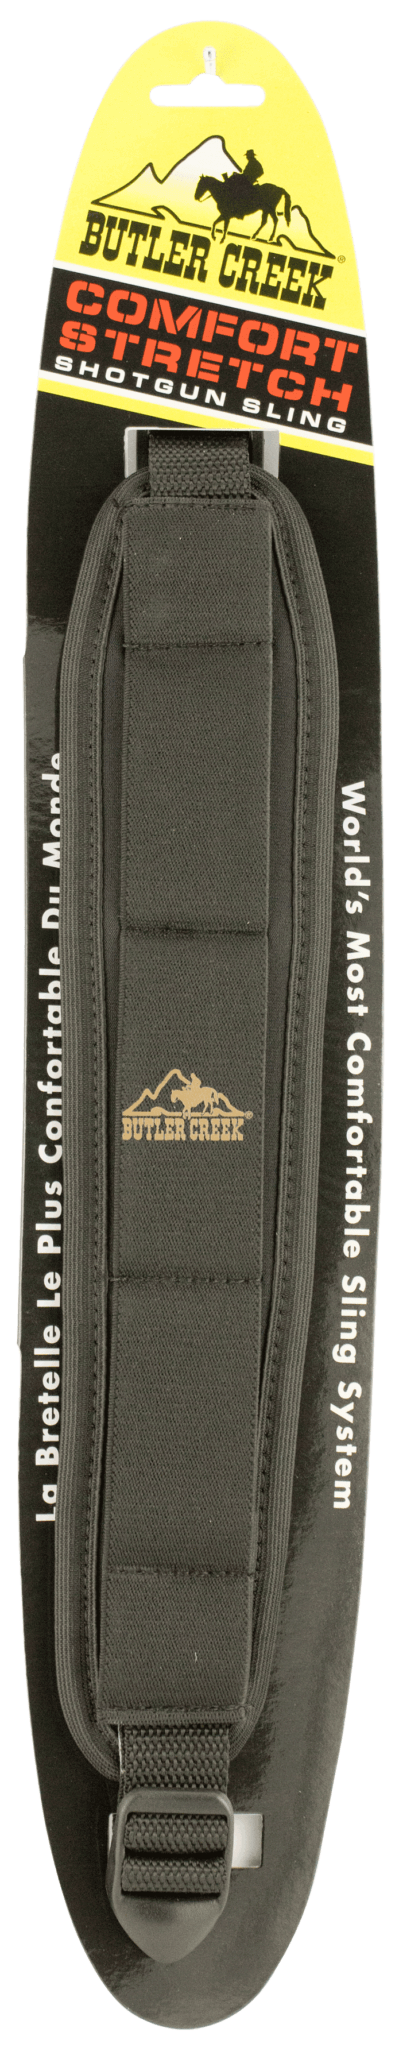 Butler Creek 80023 Comfort Stretch Sling made of Black Neoprene with Non-Slip Grippers 2.50″ W & Adjustable Design for Shotguns